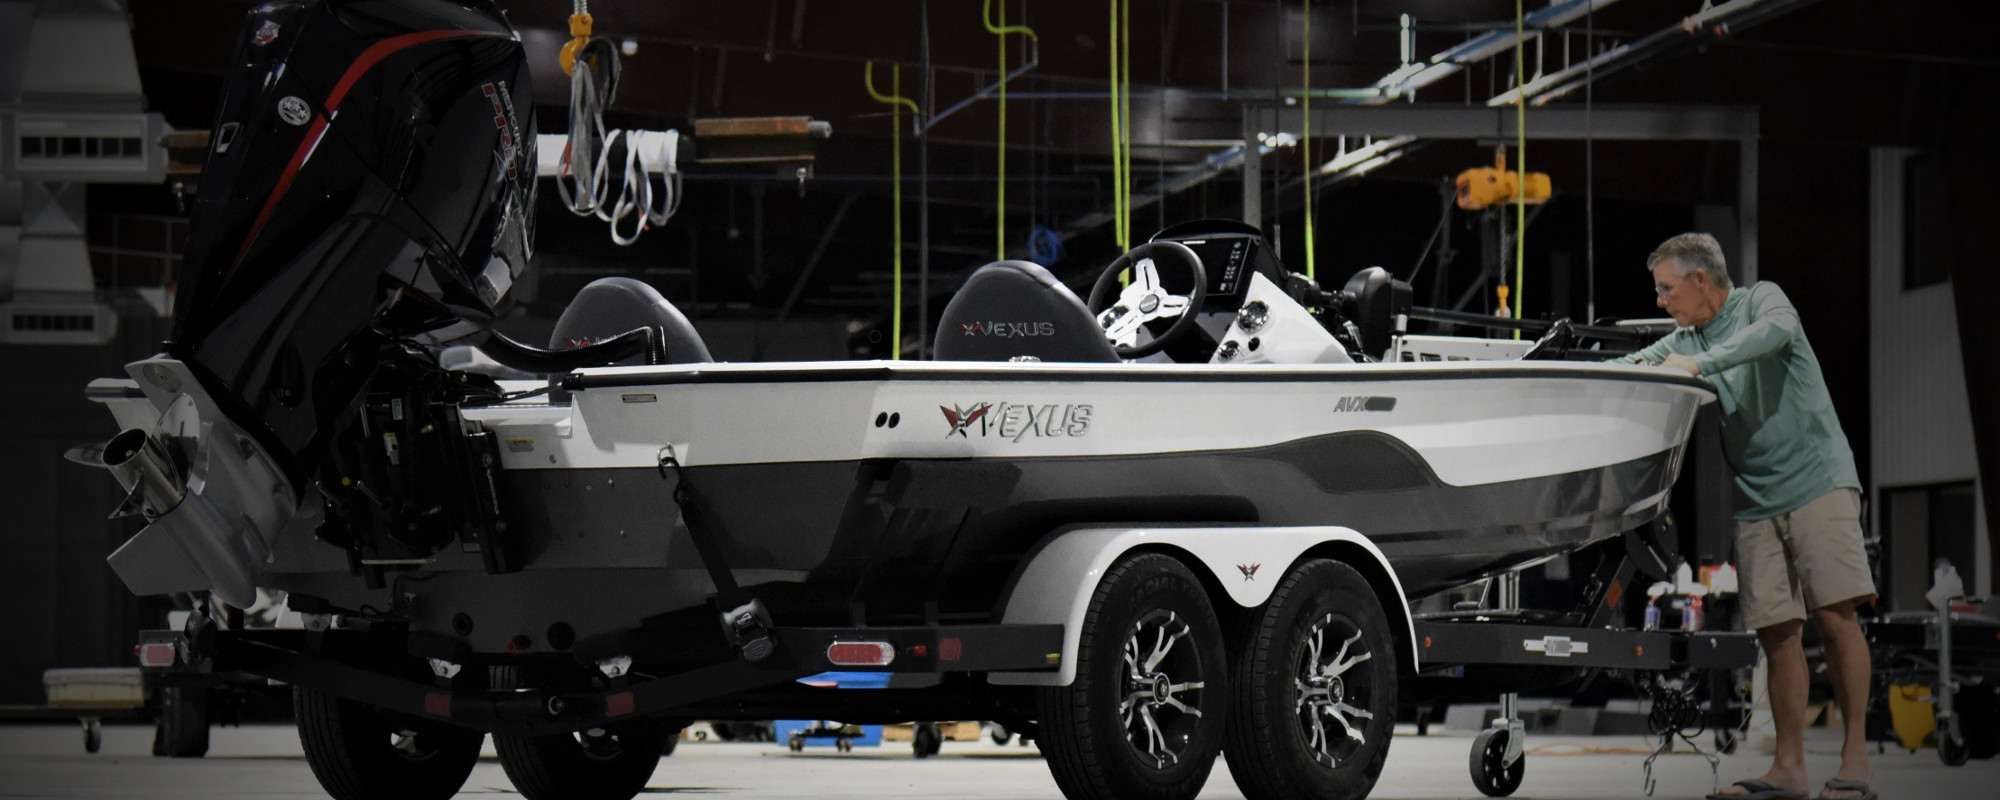 AVX2080 | Vexus Boats | Fishing Boat Manufacturer